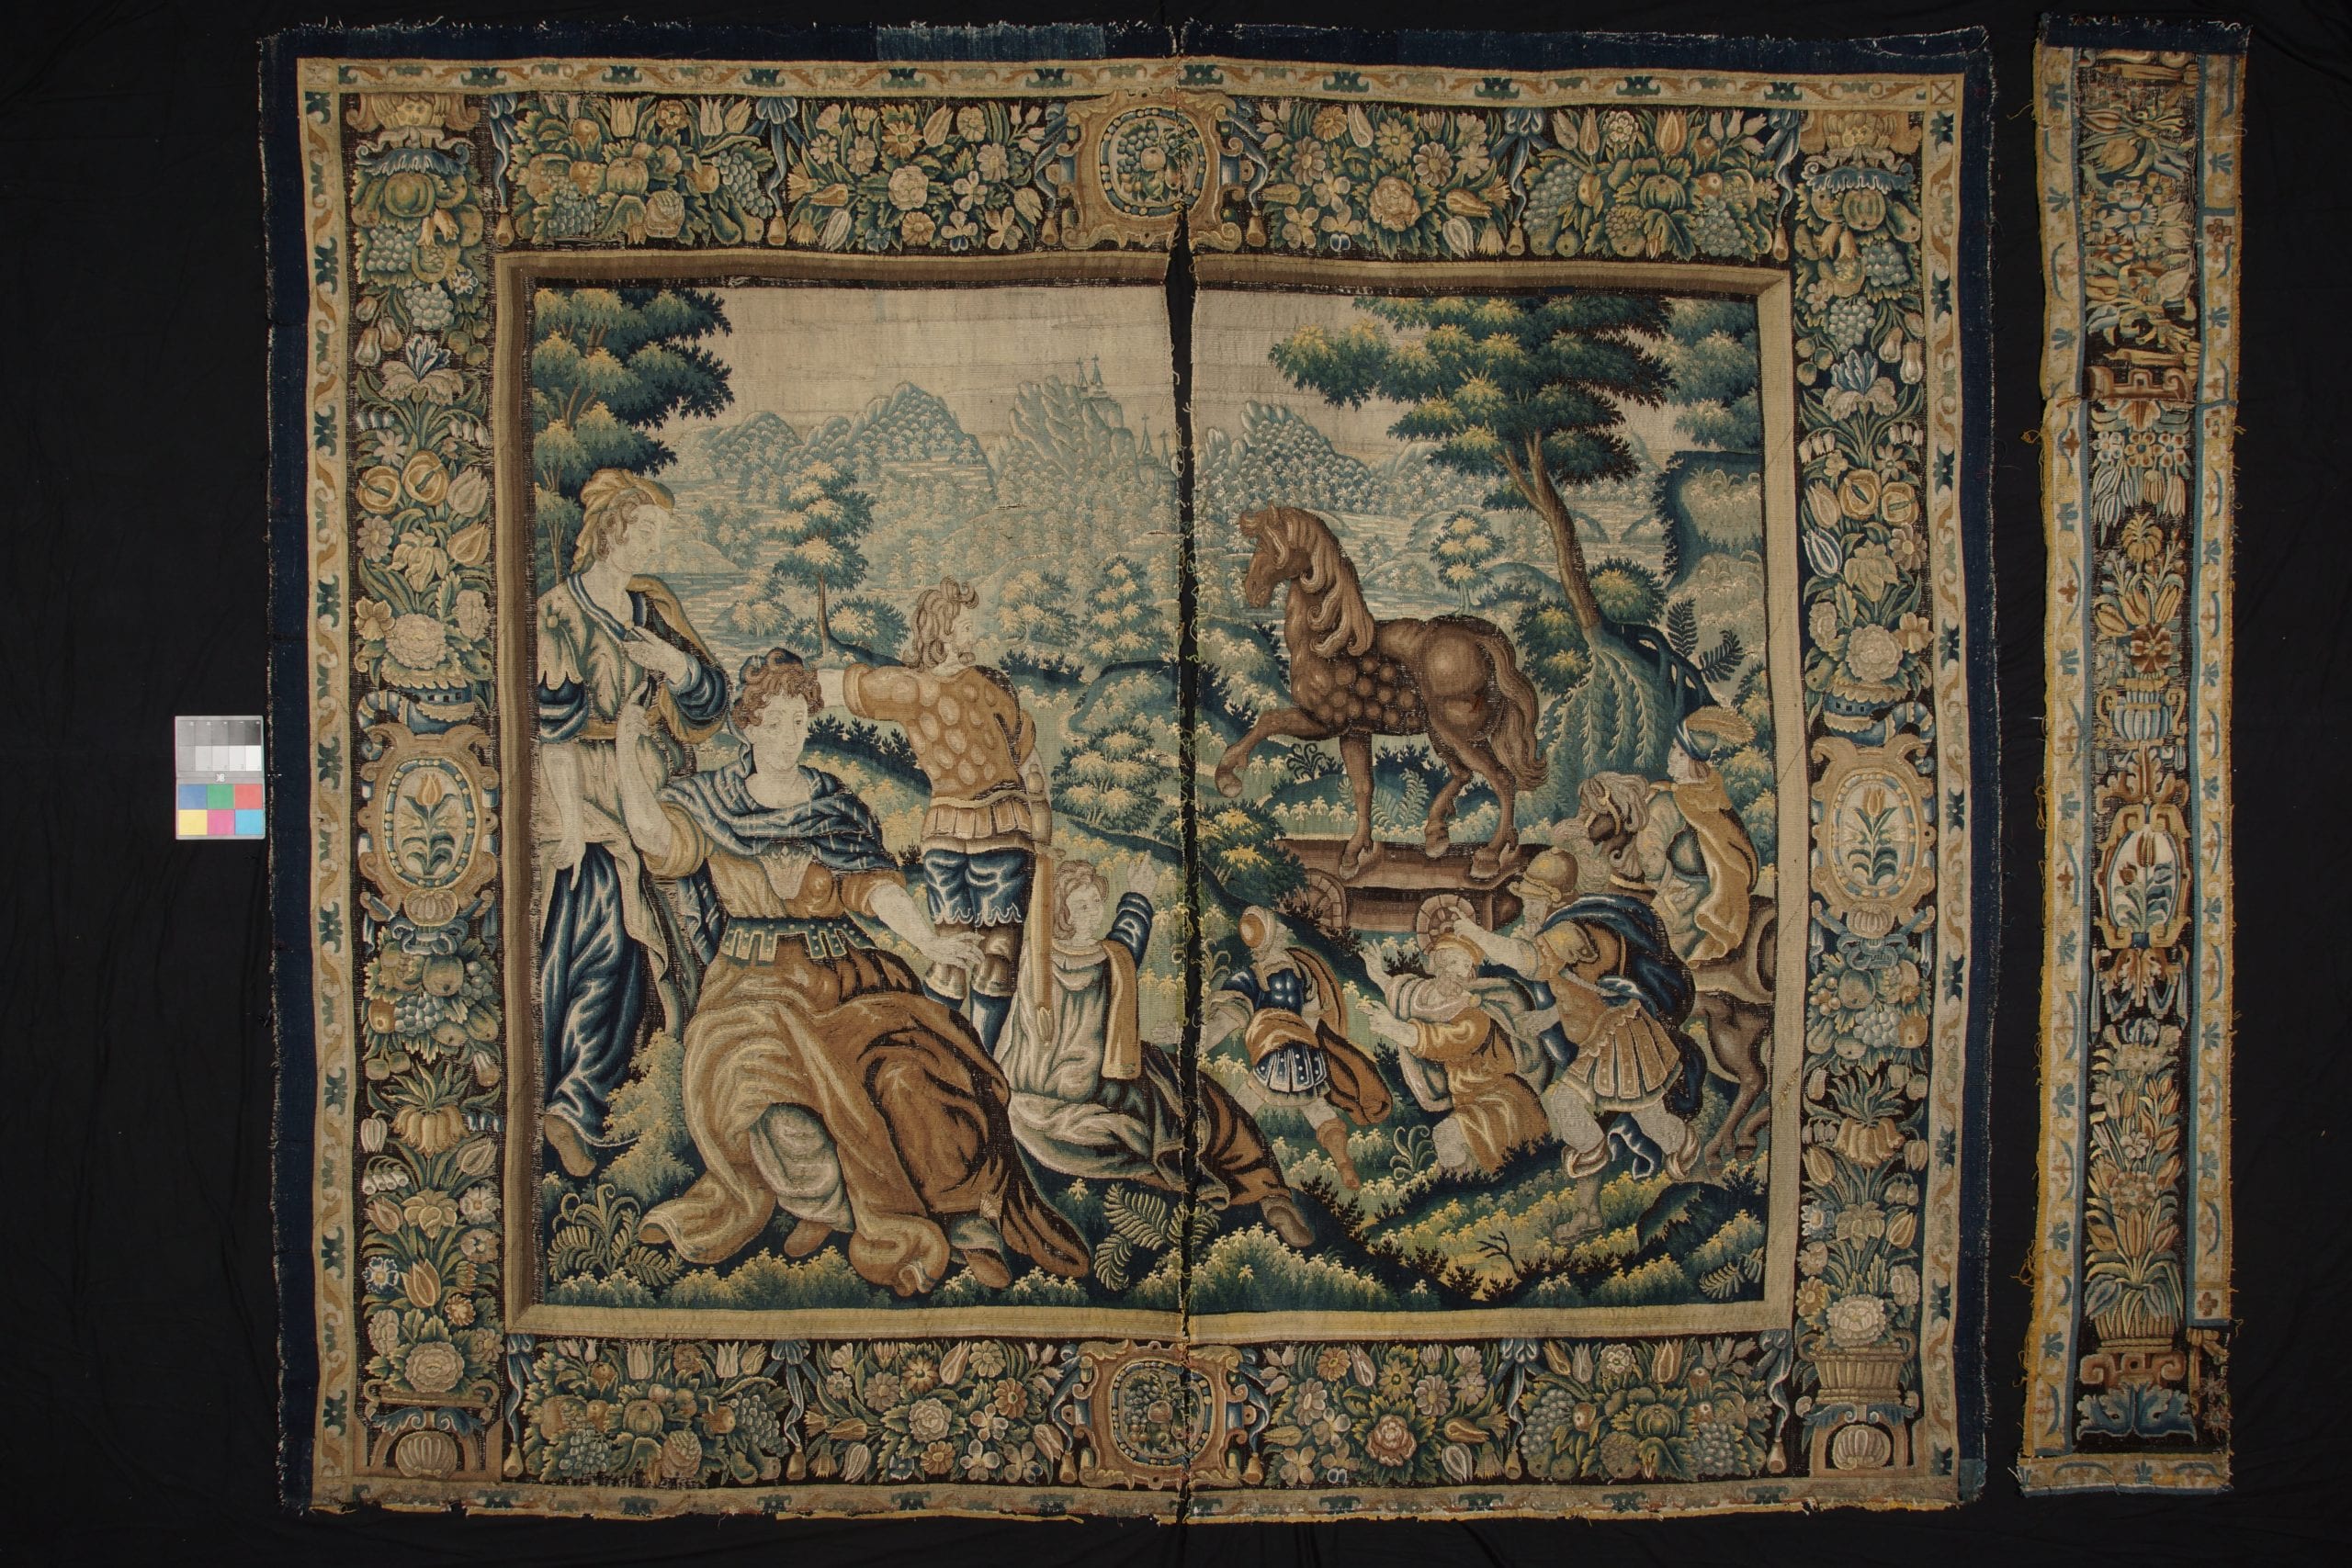 Adviser- Doddington Tapestry Conservation Project